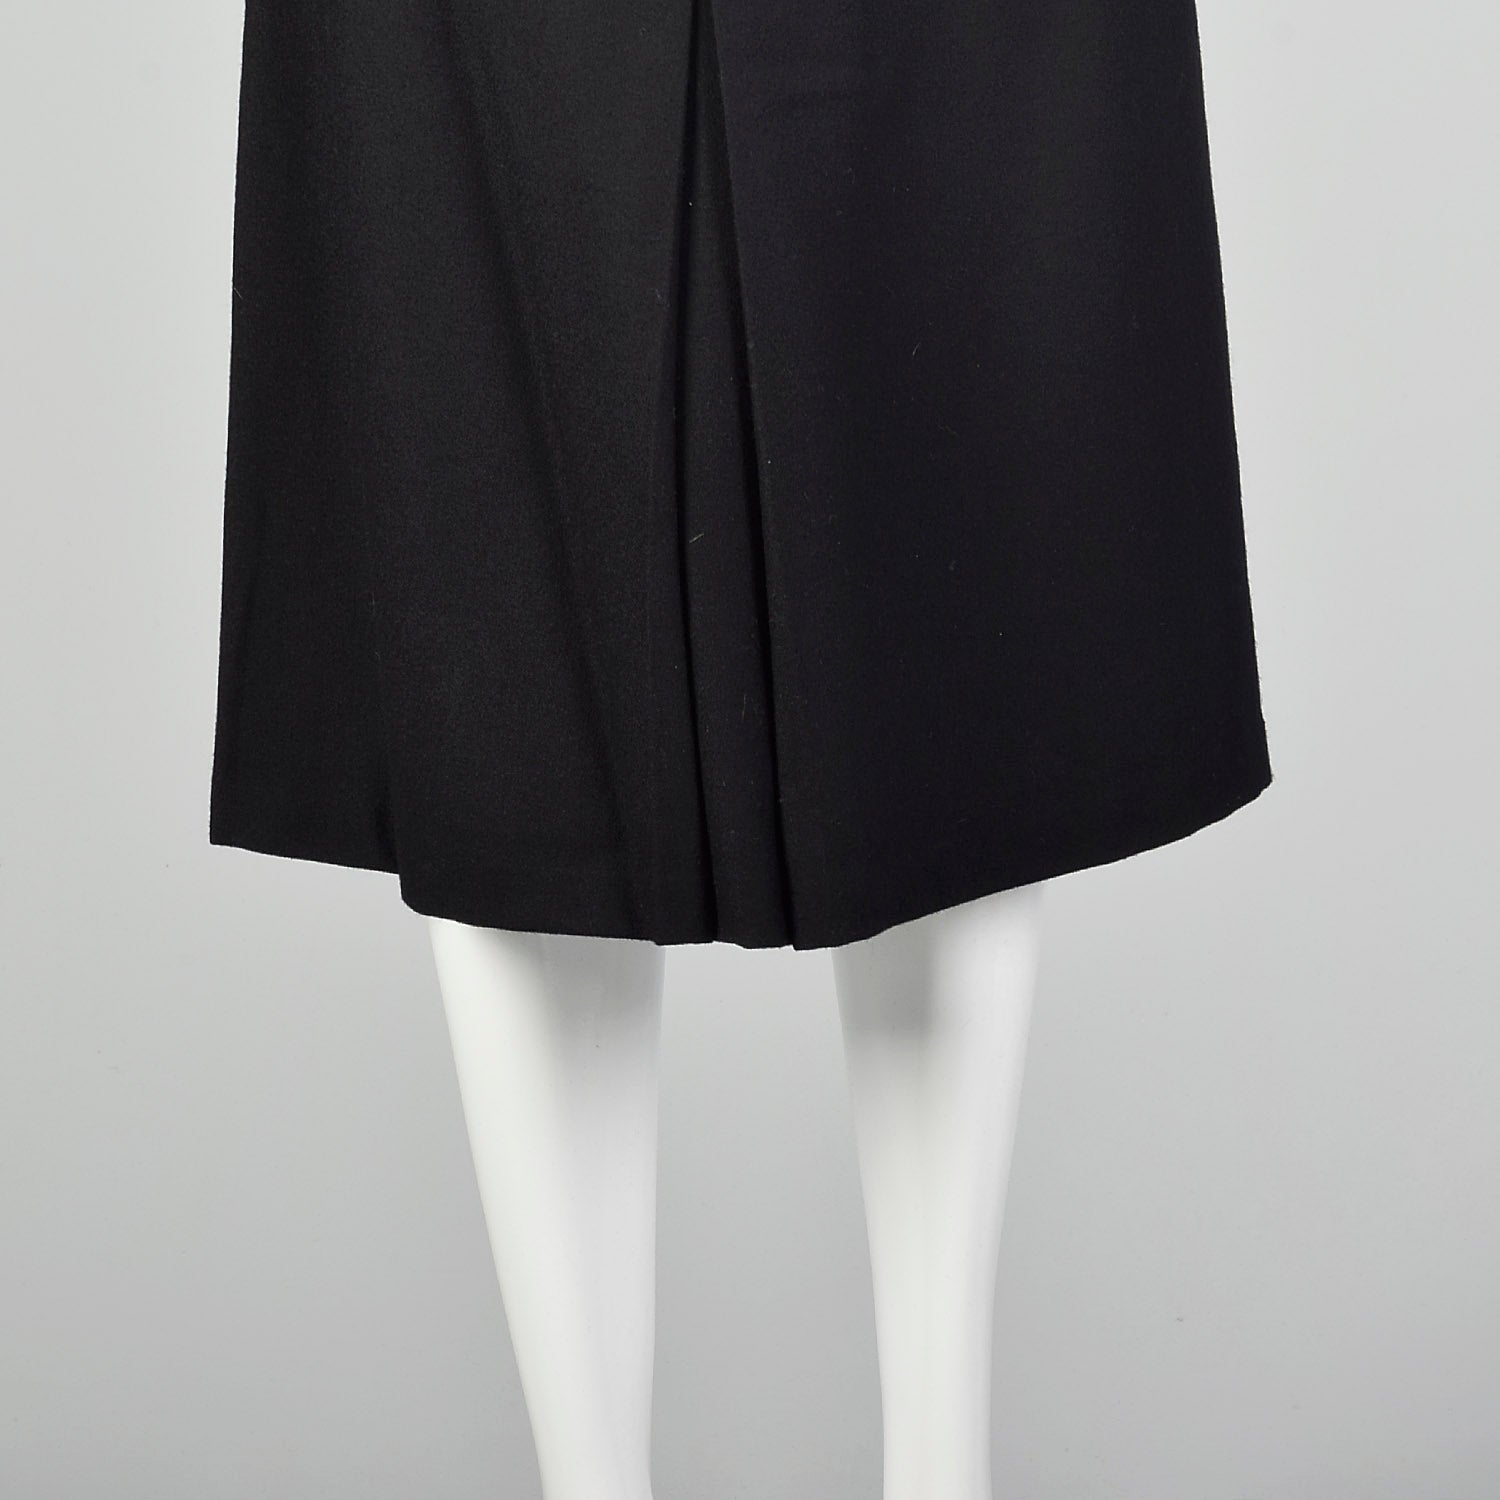 Small J. Tiktiner 1960s Black A Line Skirt